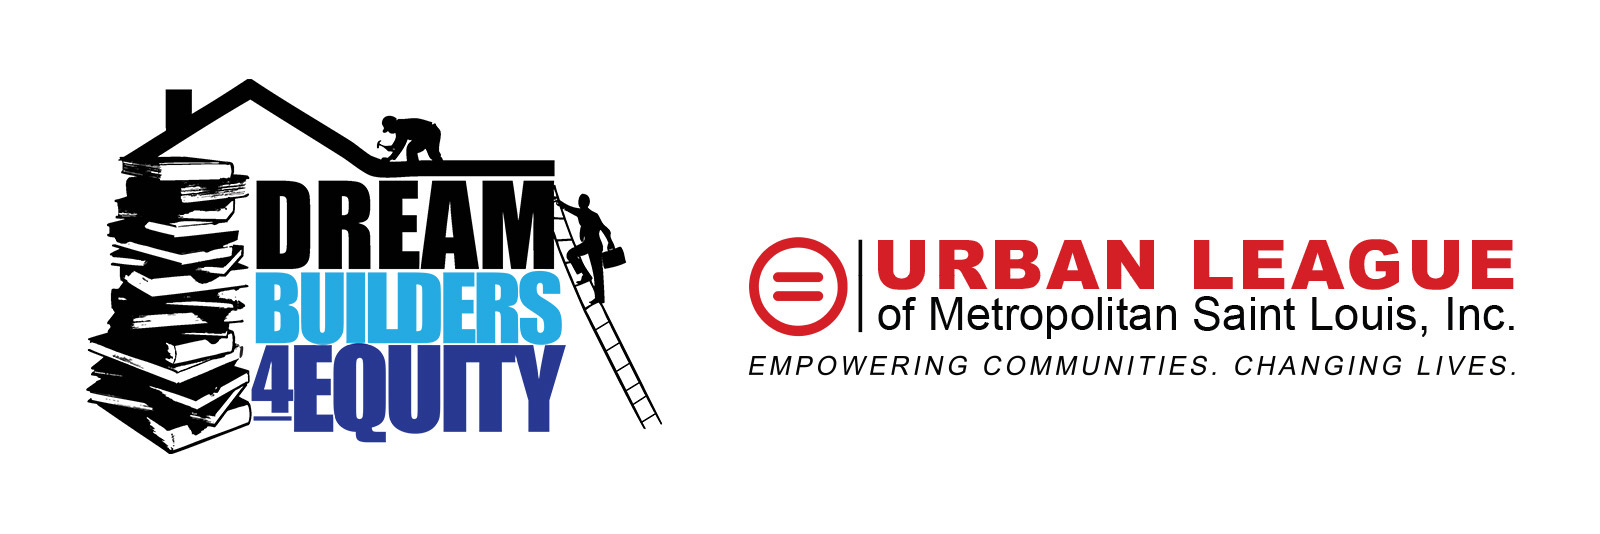 Dream Builders 4 Equity and Urban League of Metropolitan Saint Louis logos